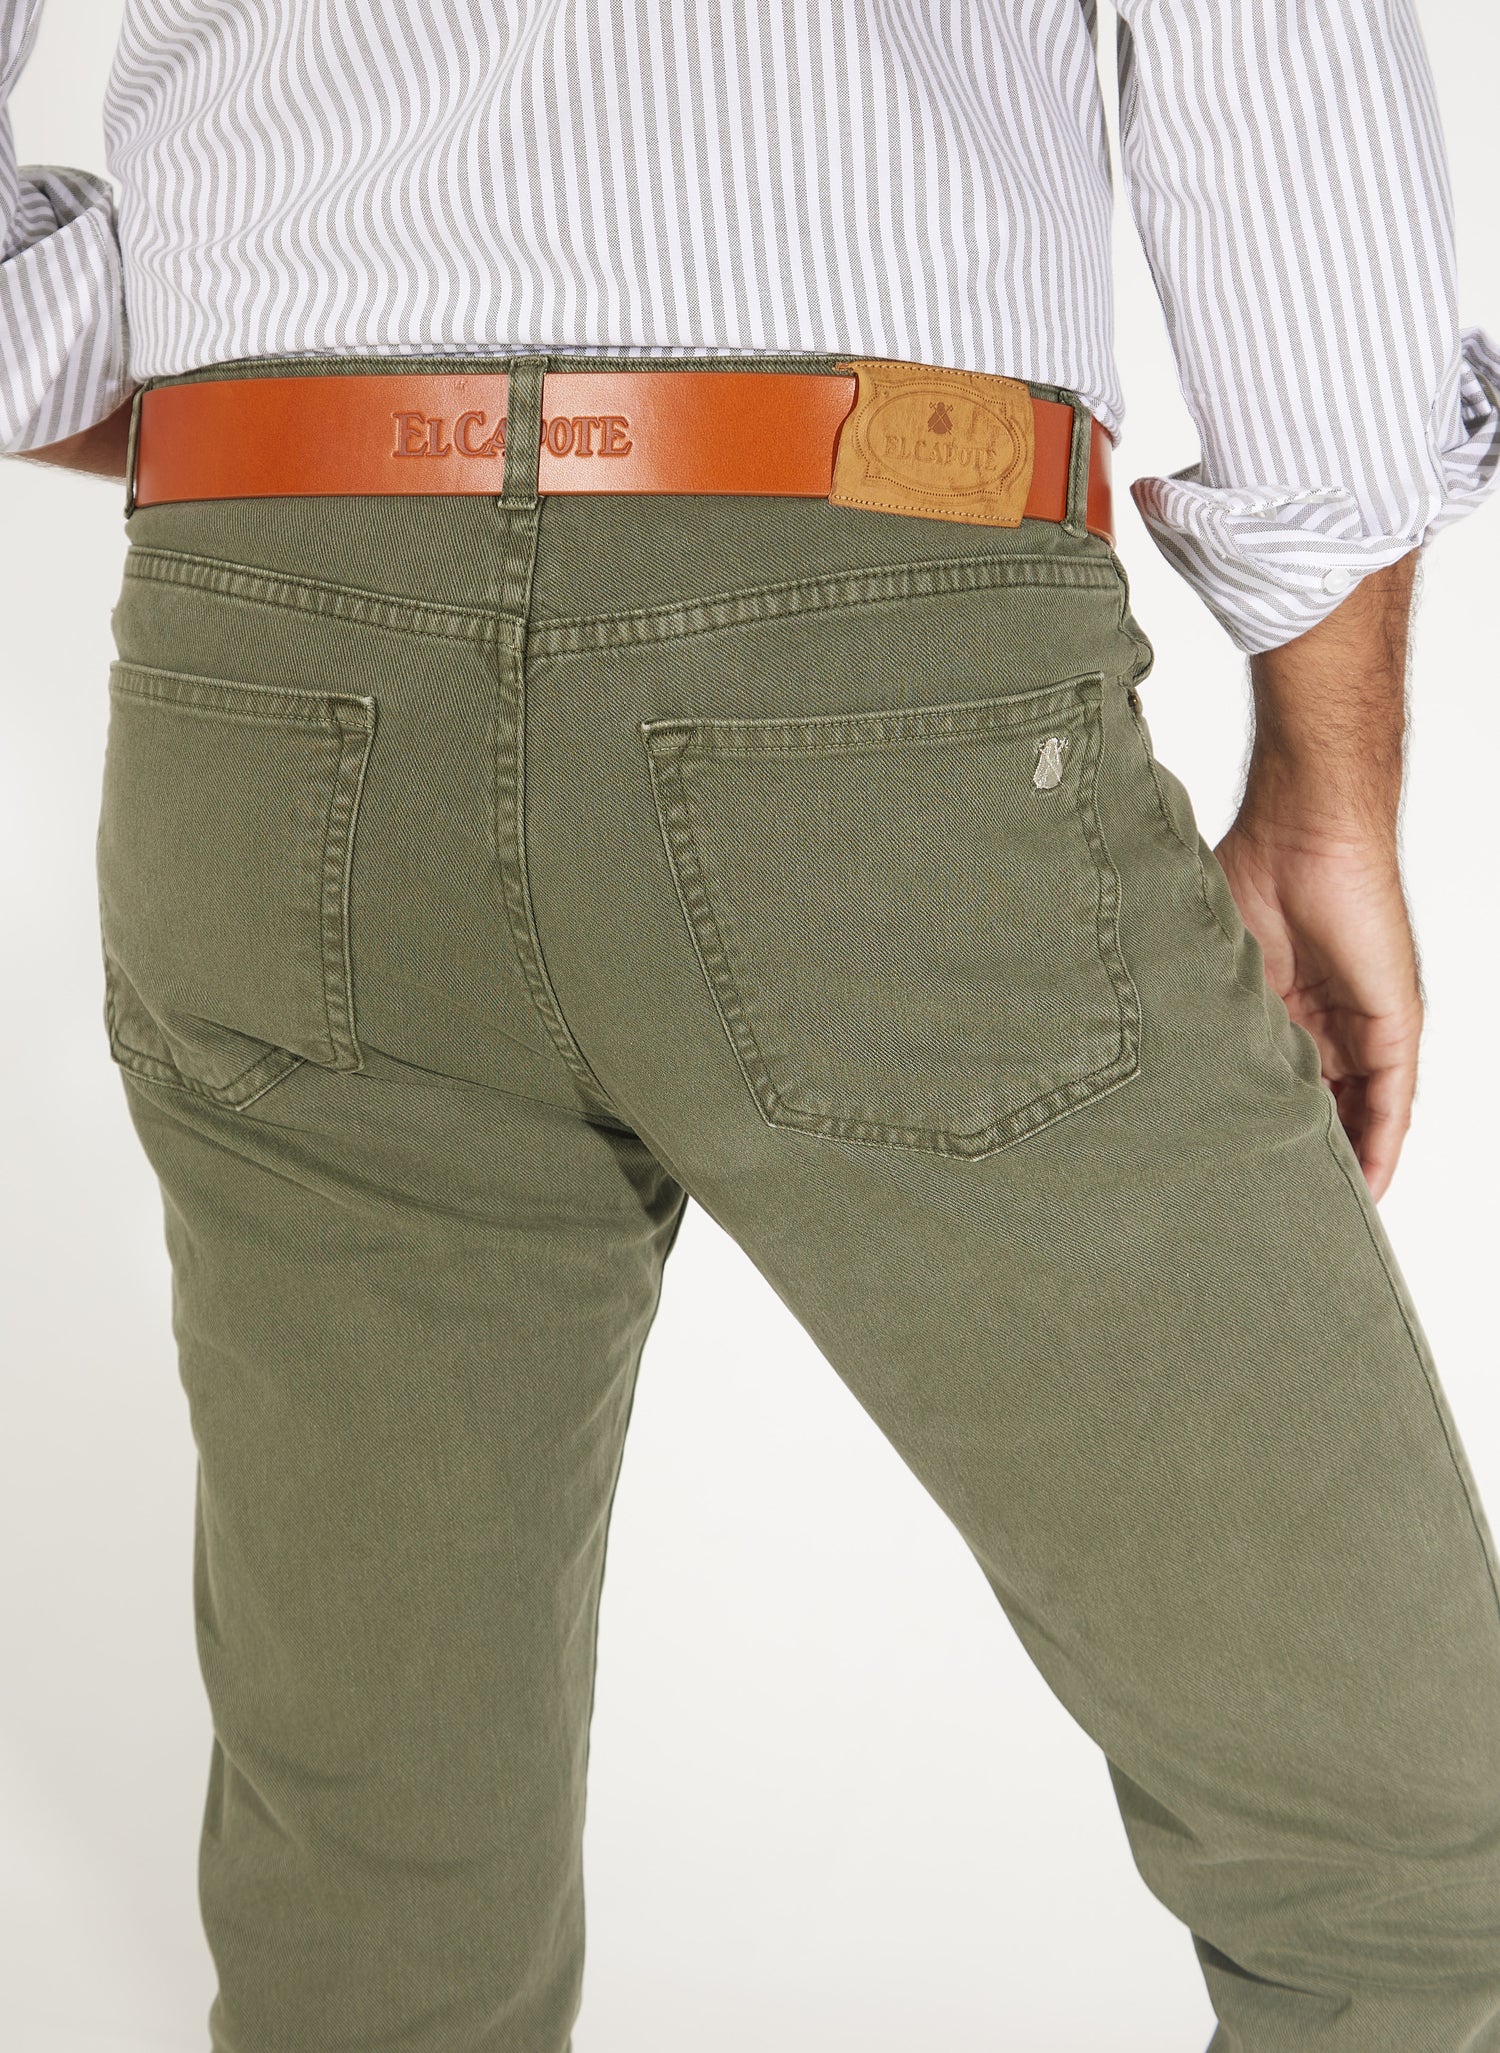 Khaki Green Pants 5 Pockets Man